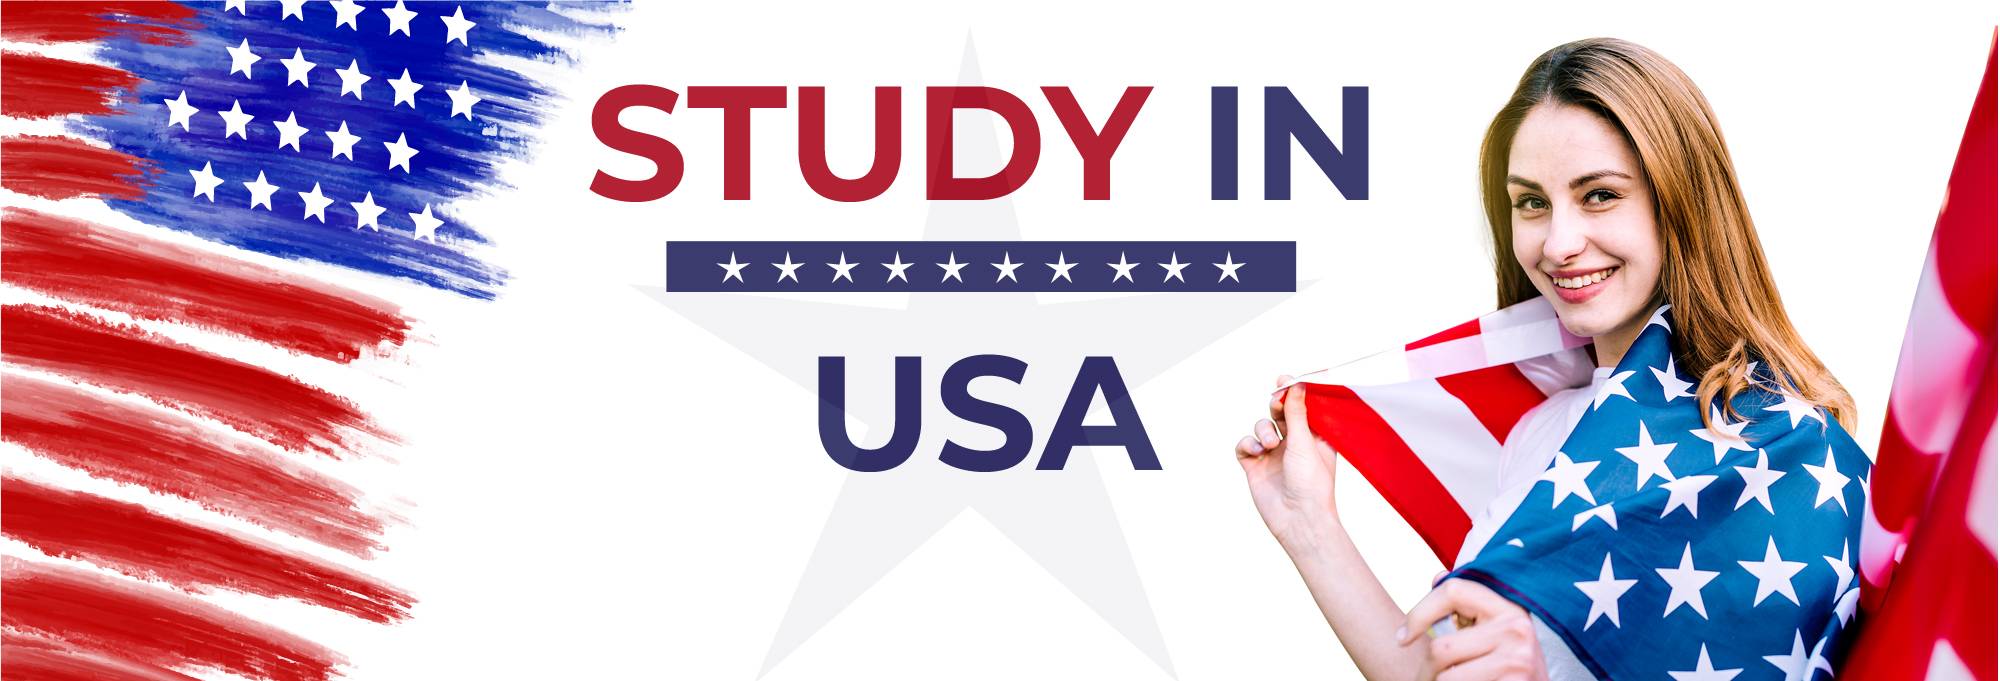 STUDY IN USA - skybird